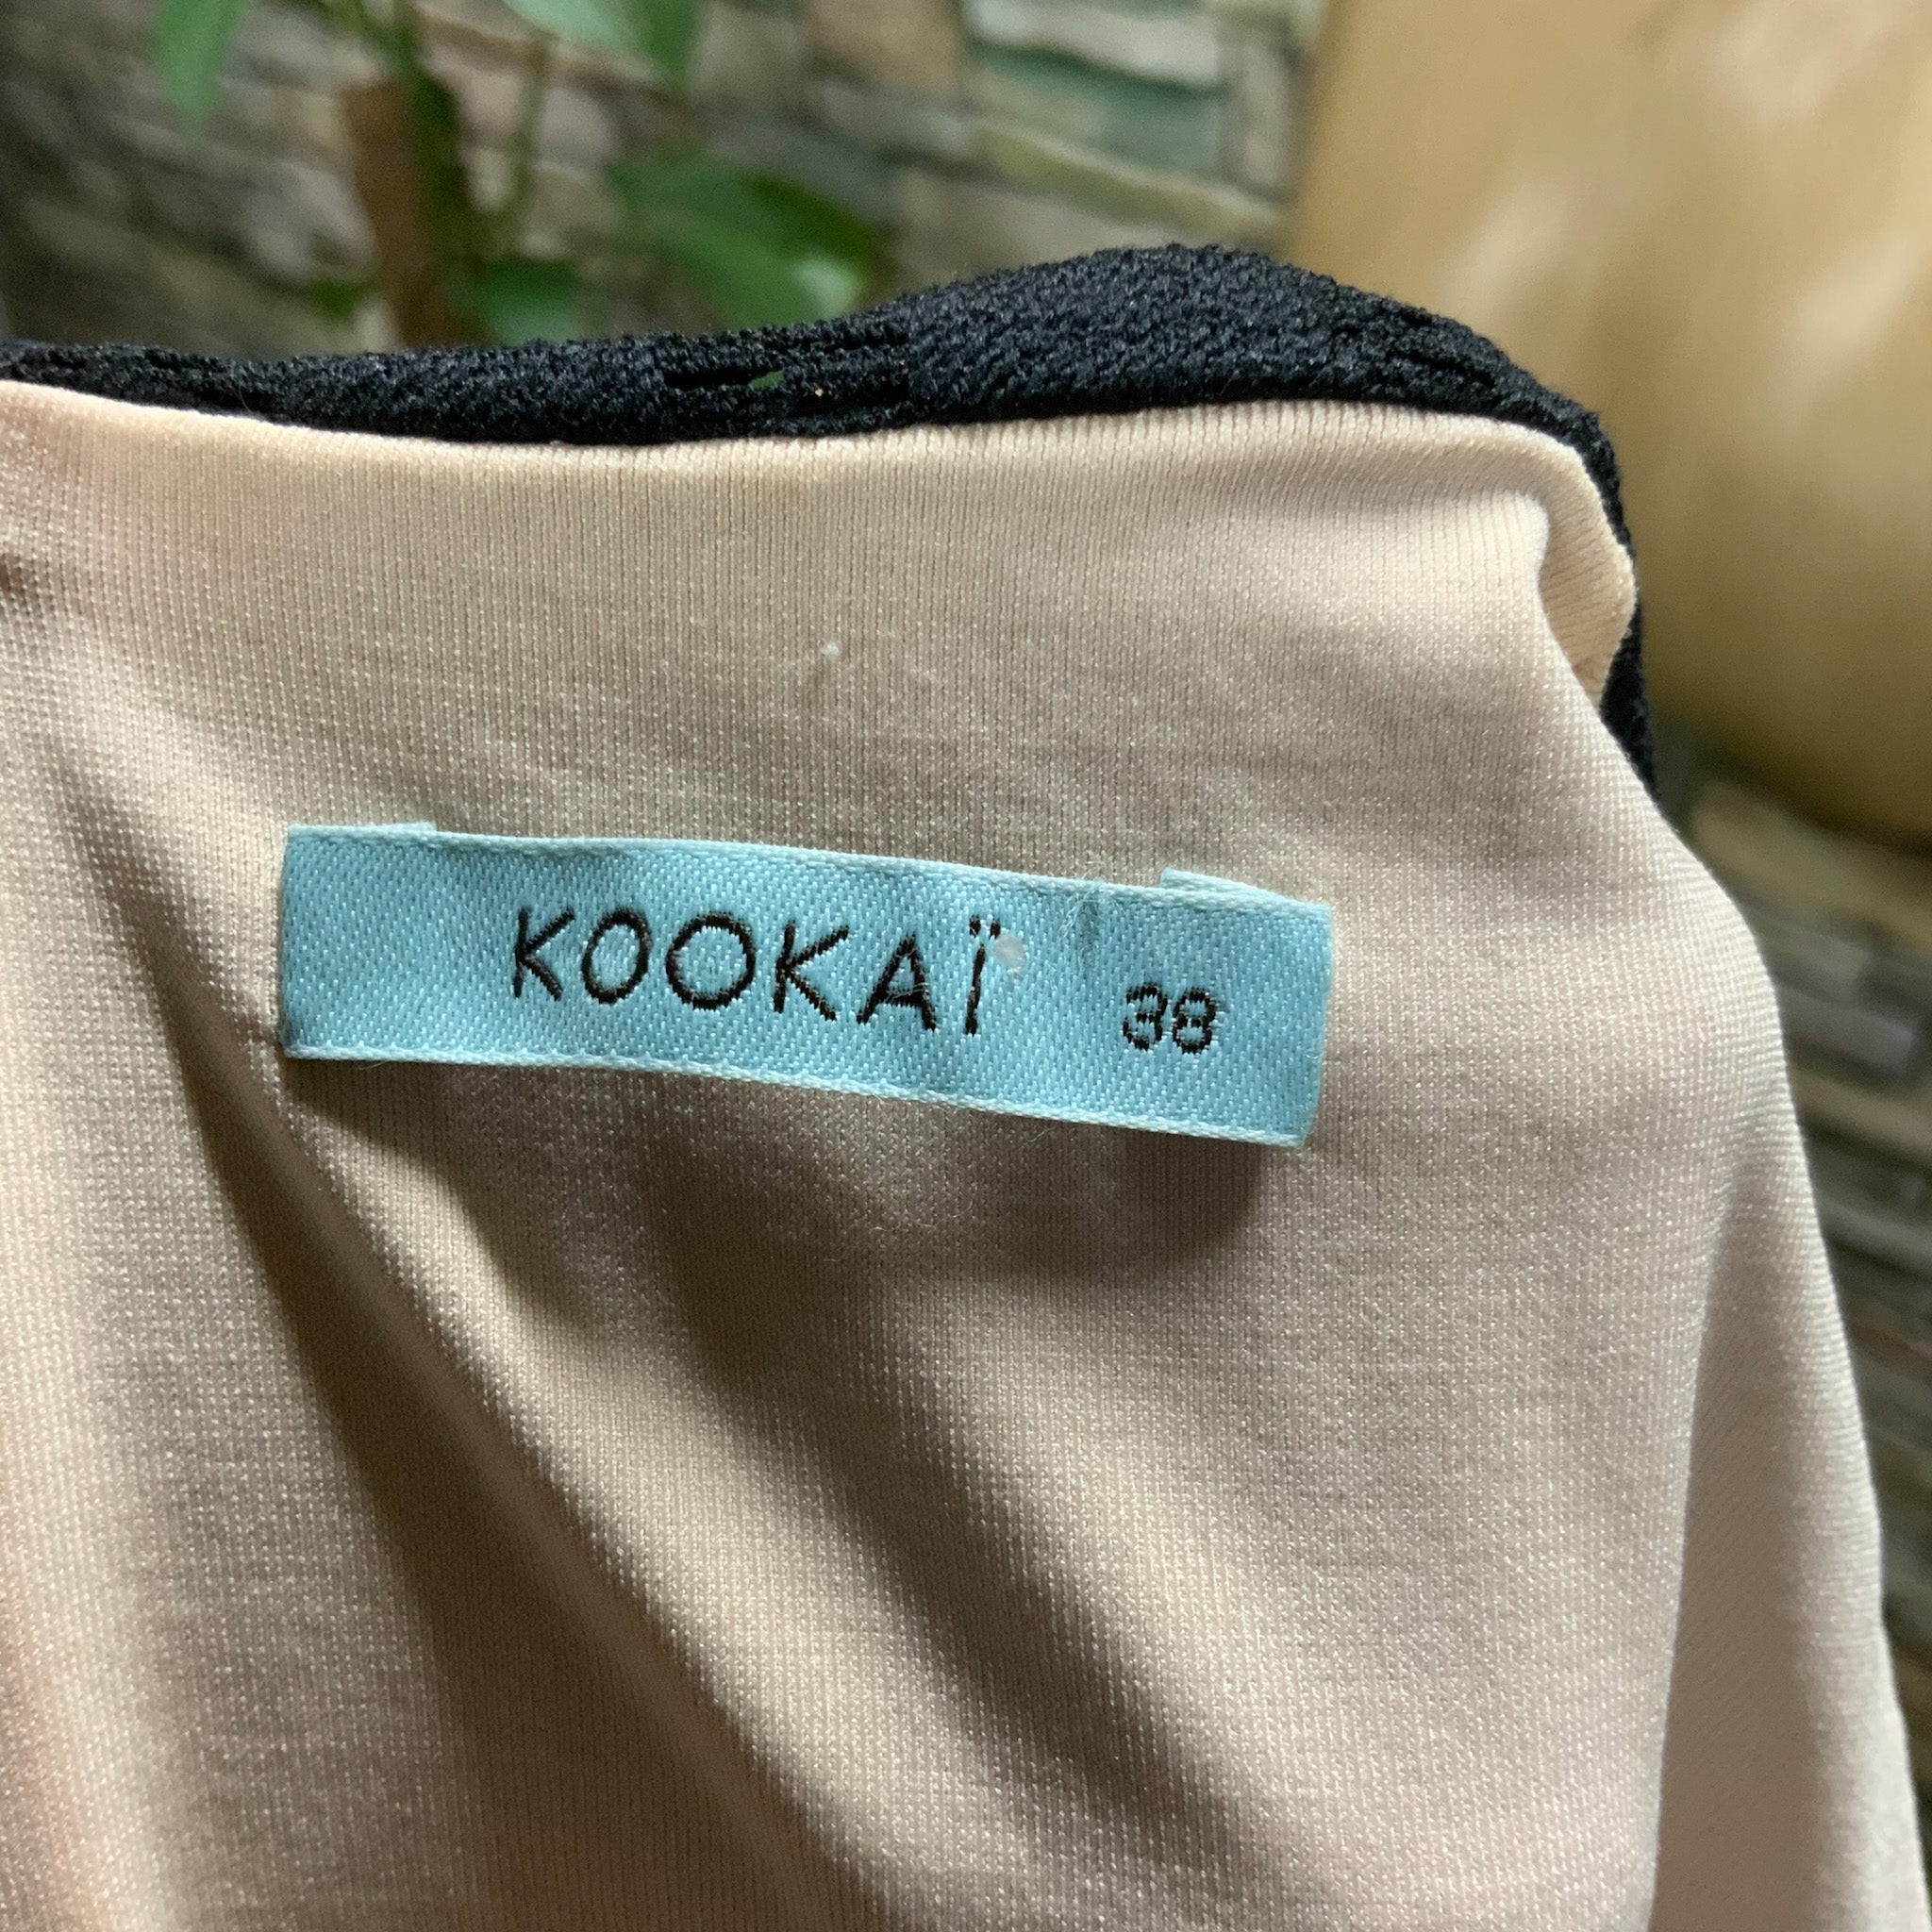 KOOKAI Black and Cream Lace Patterned Bodycon Dress - Size 38 (AU8)